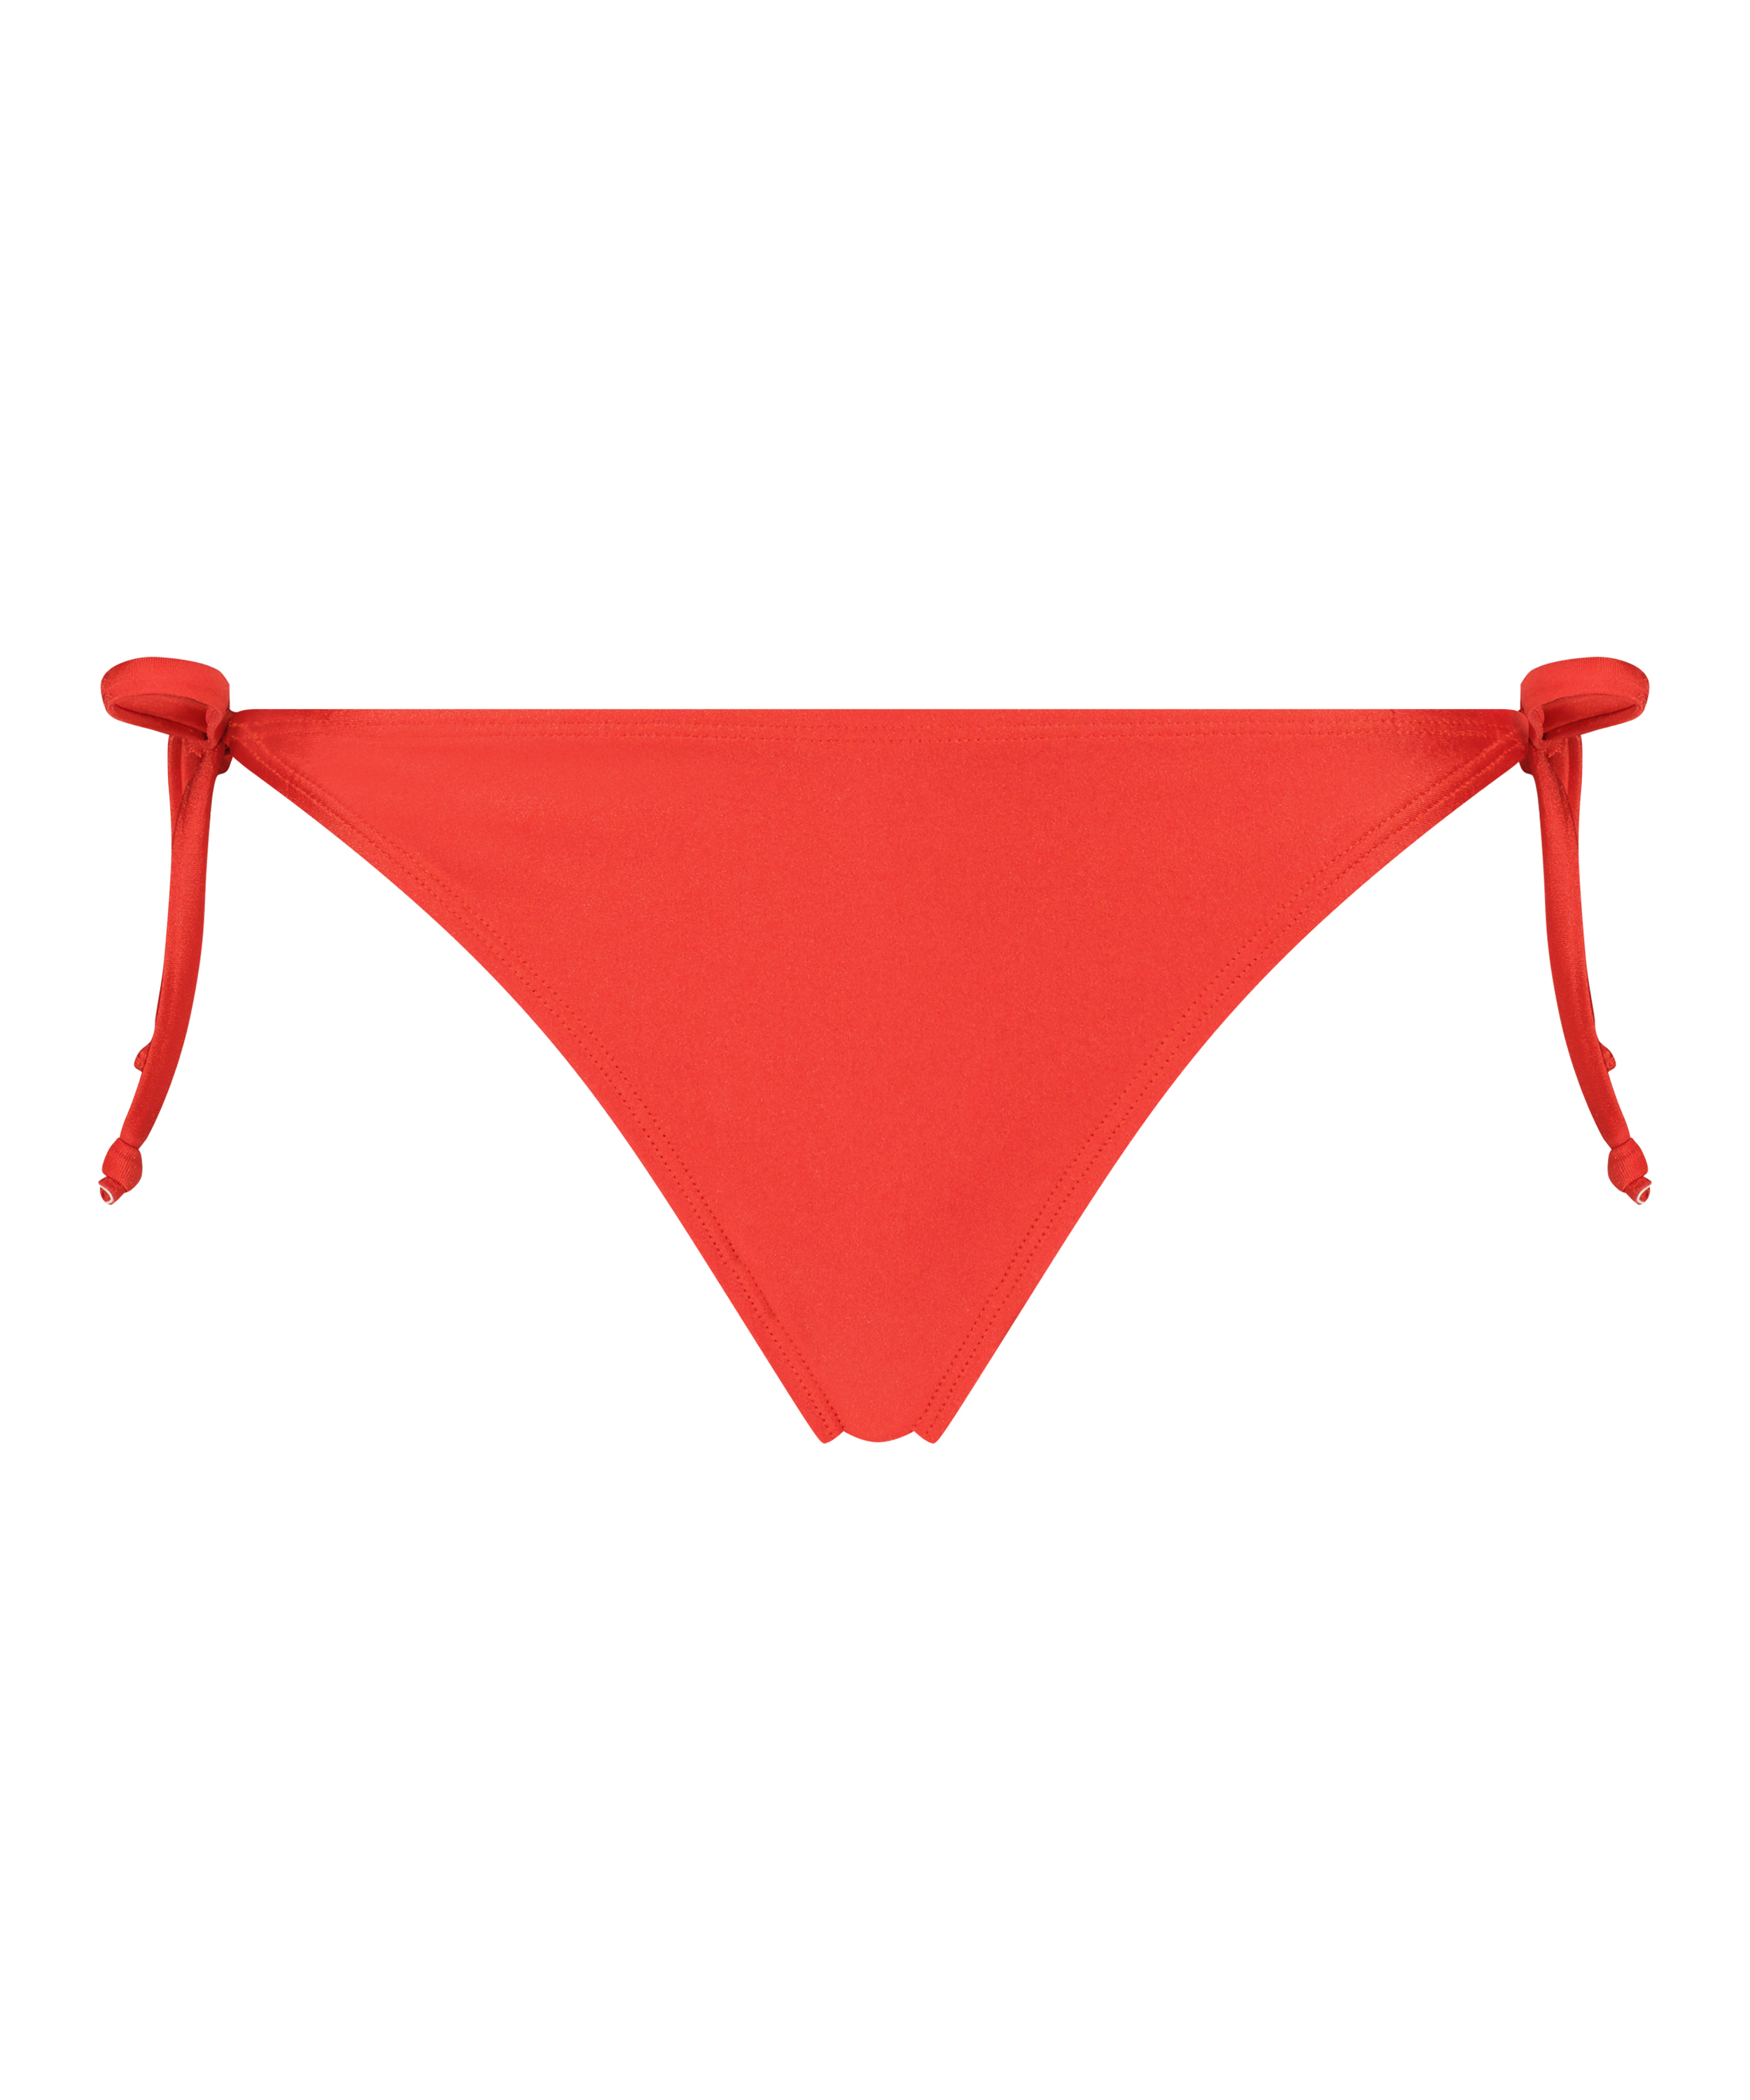 BoraBora Cheeky Bikini Bottoms, Red, main